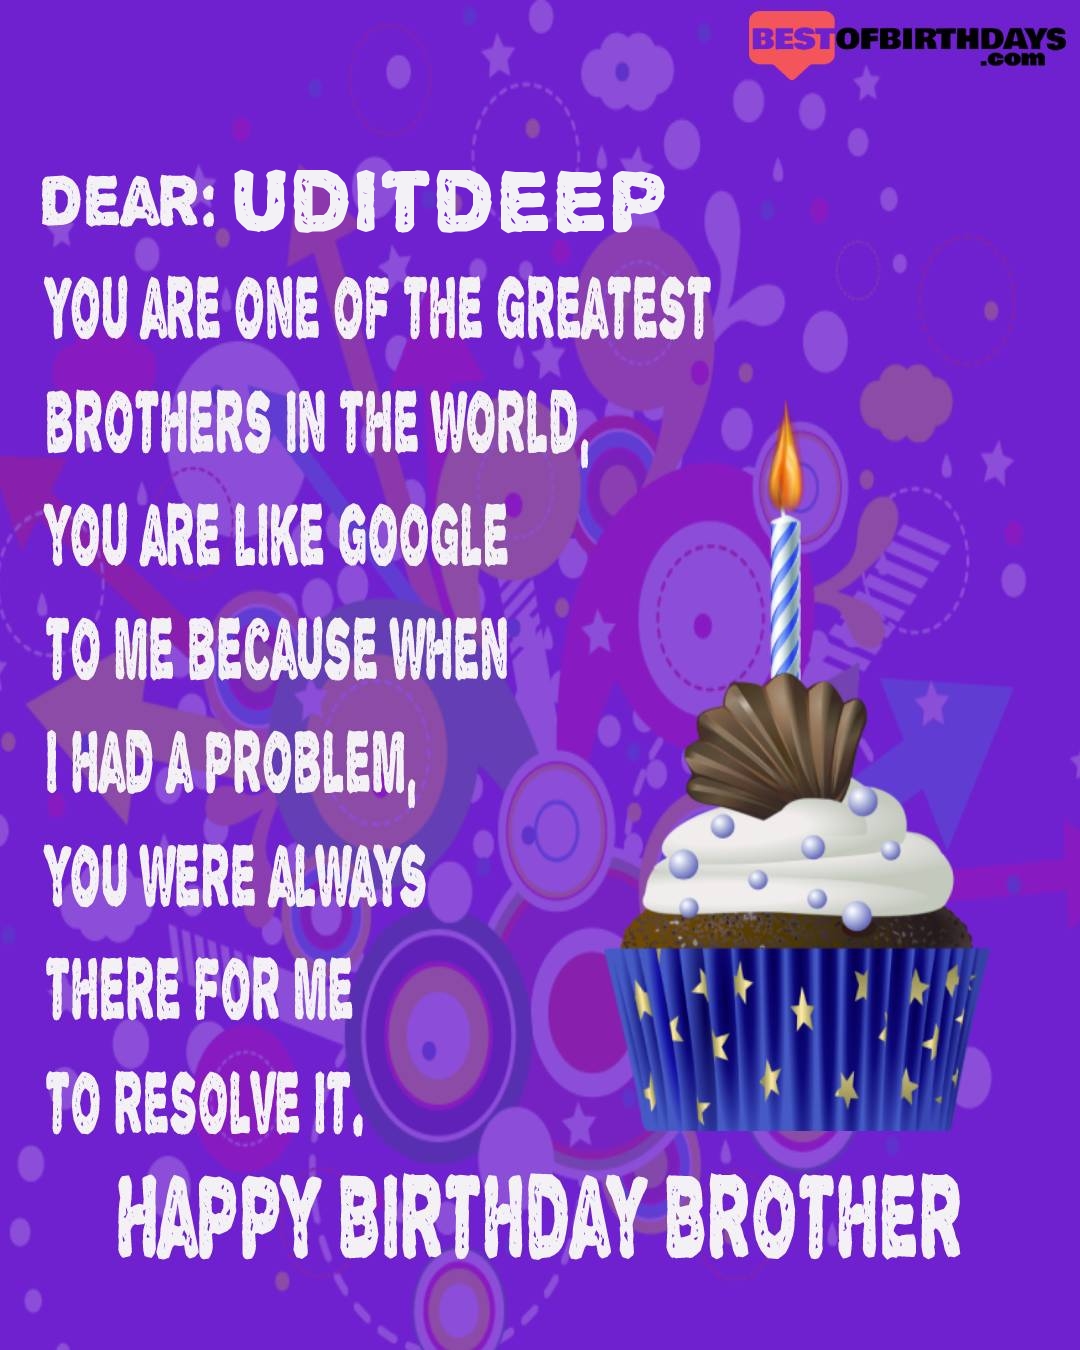 Happy birthday uditdeep bhai brother bro